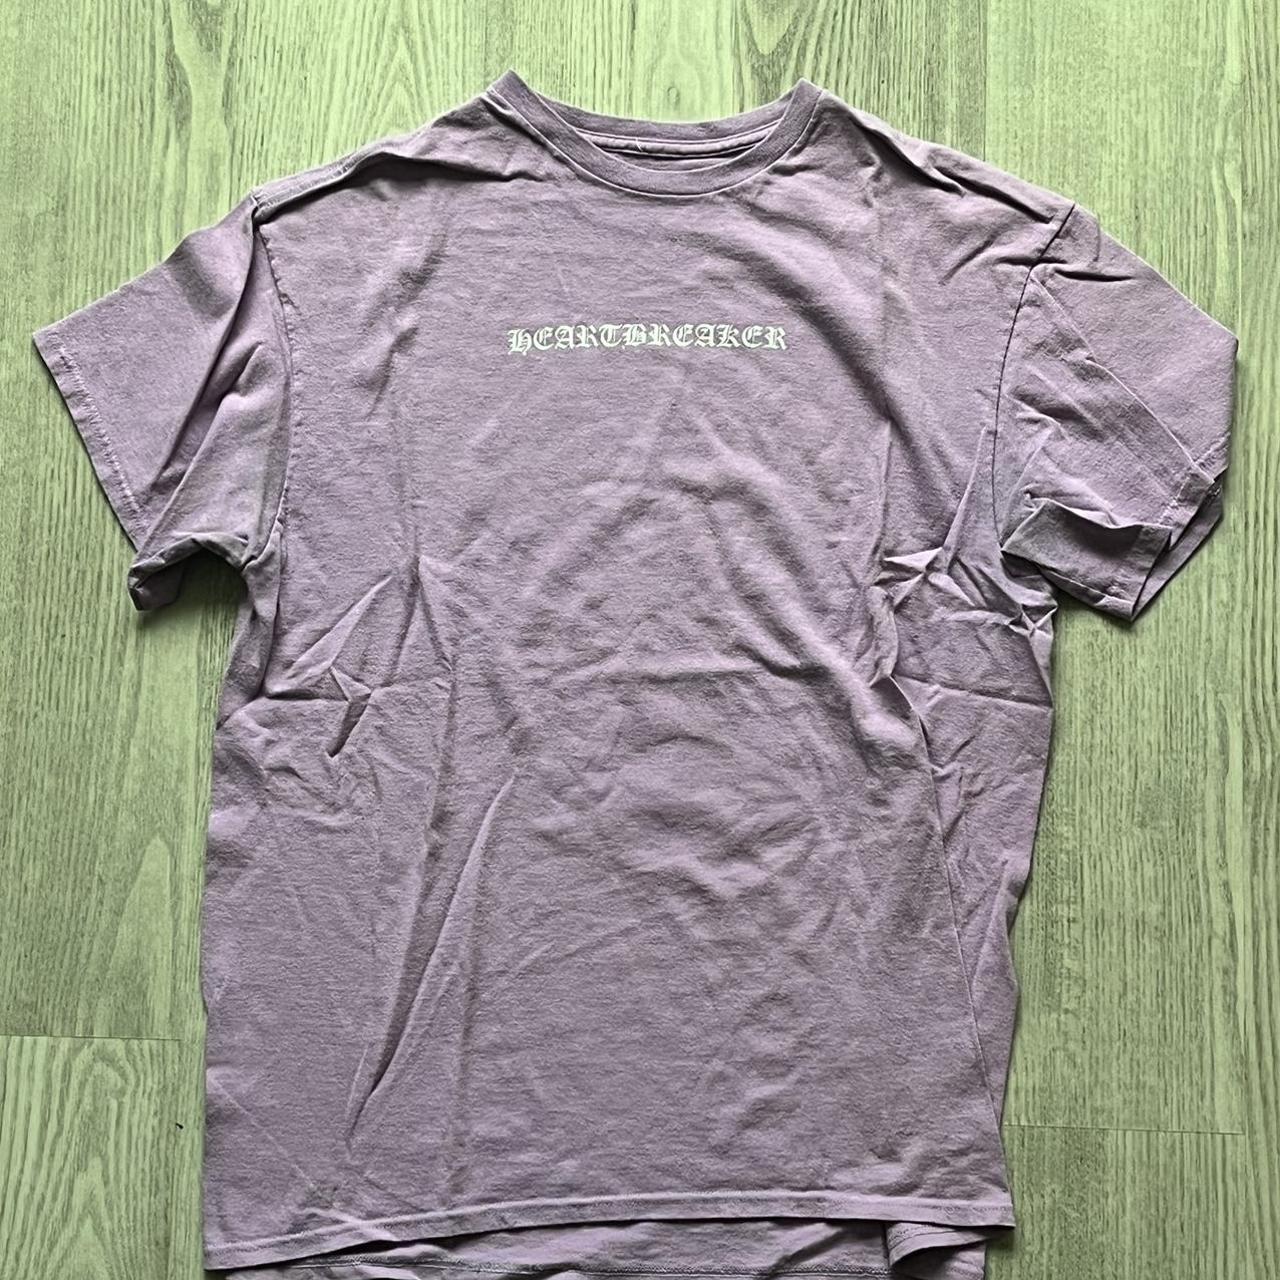 Heartbreak Men's Purple and White T-shirt